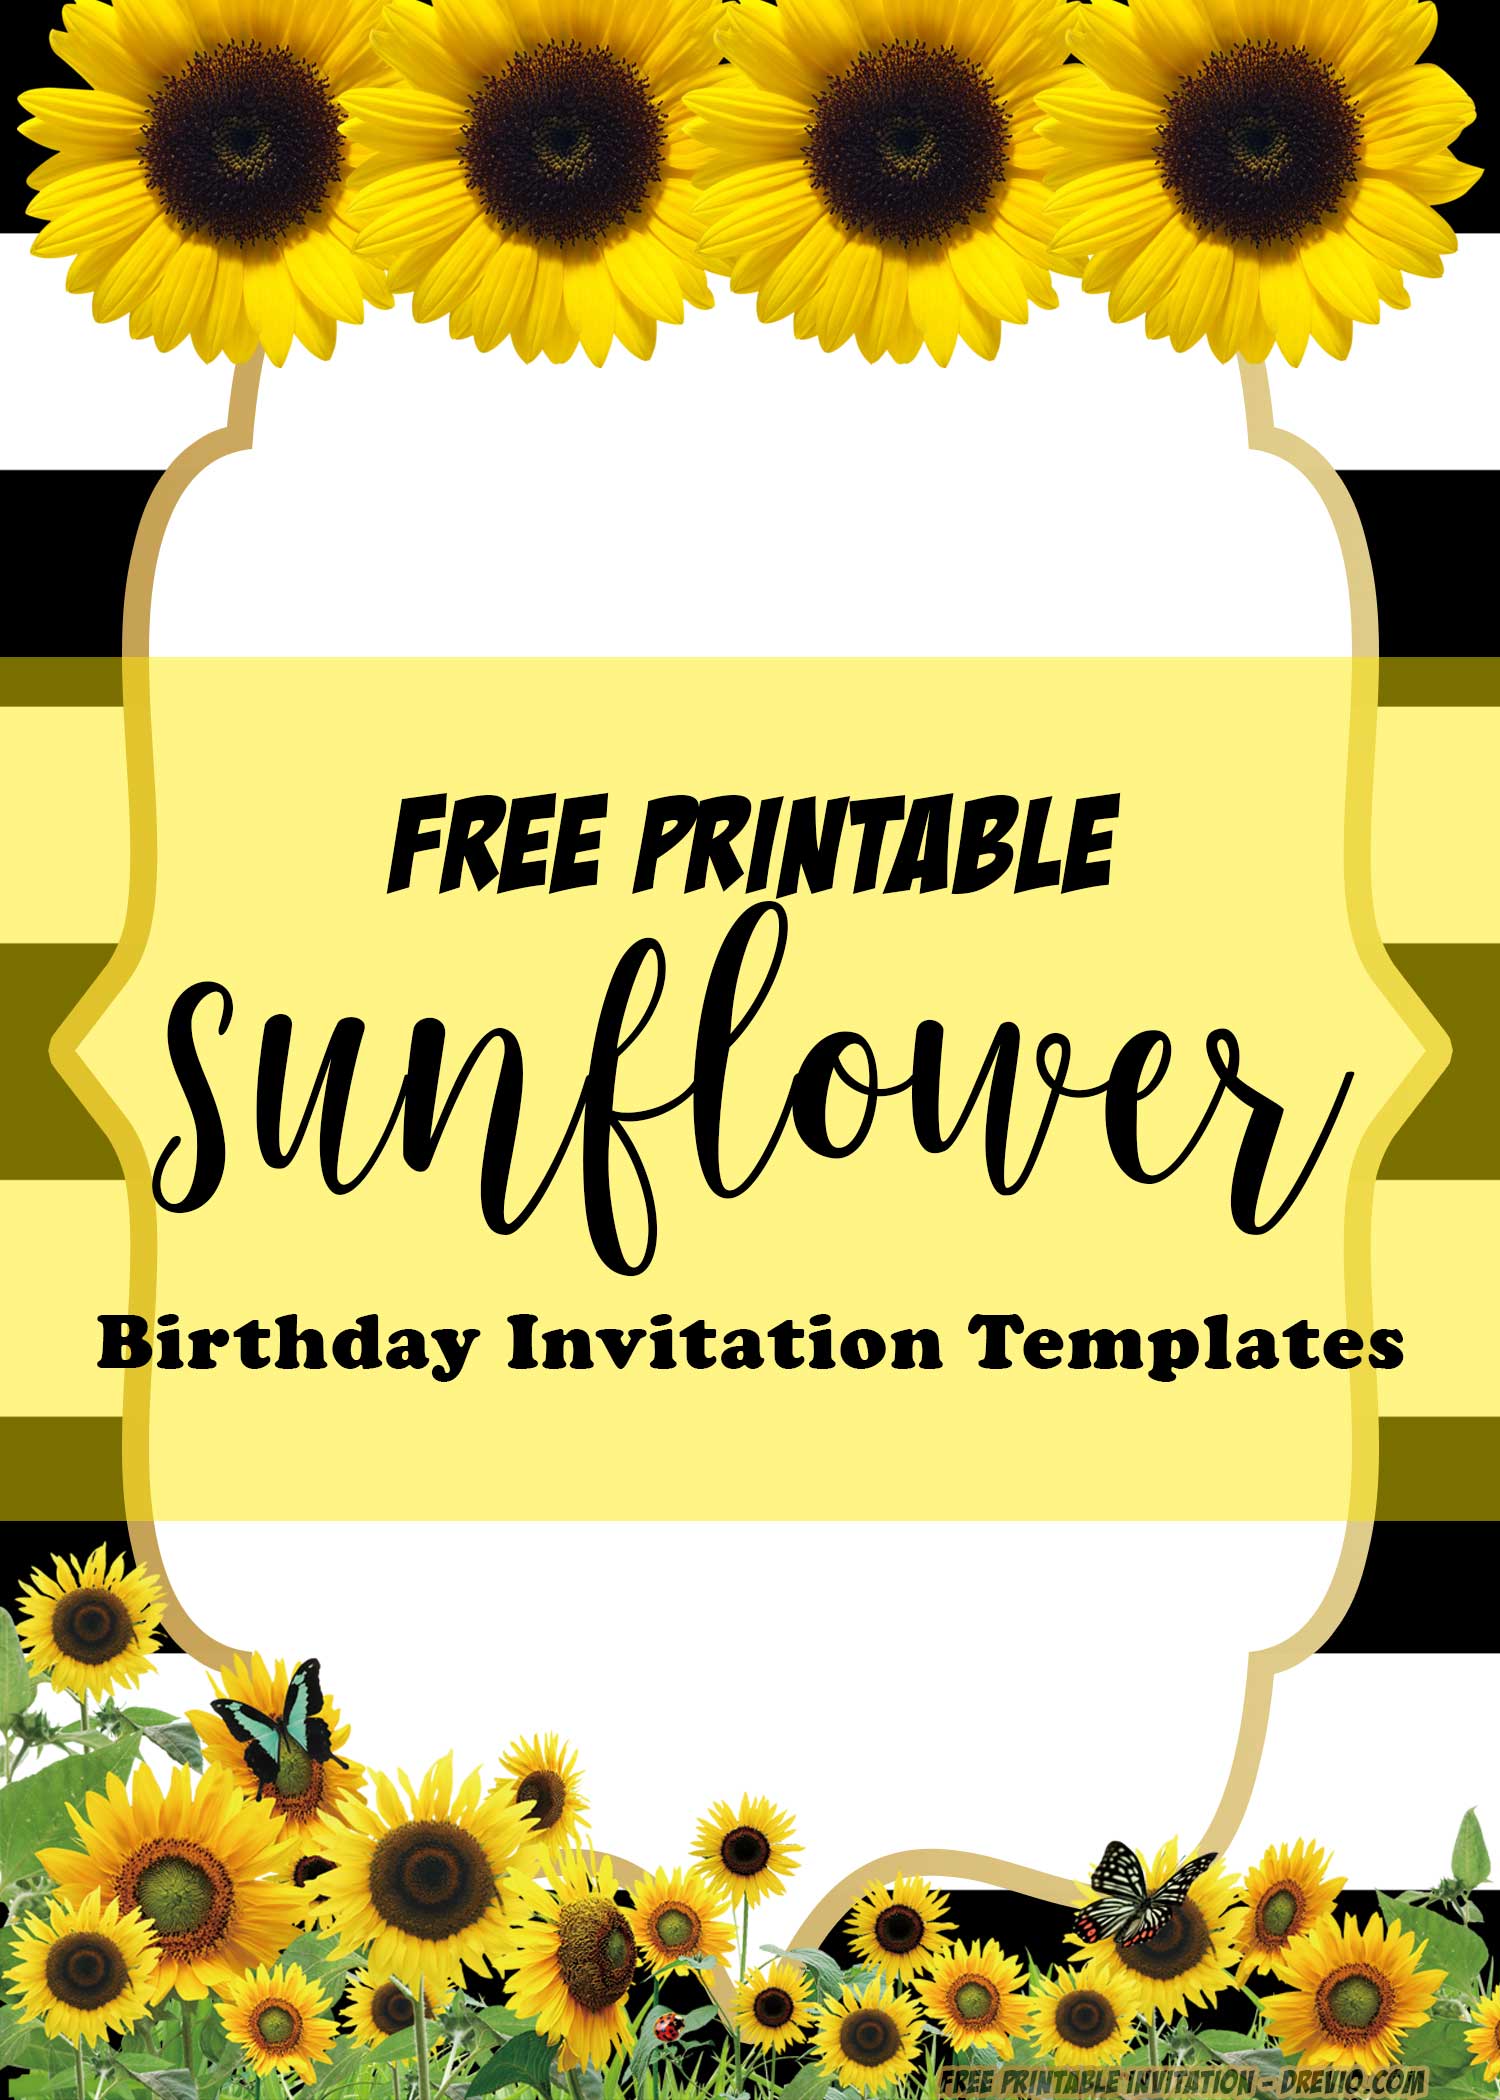 Free Sunflower Birthday Invitation Template - FREE PRINTABLE TEMPLATES